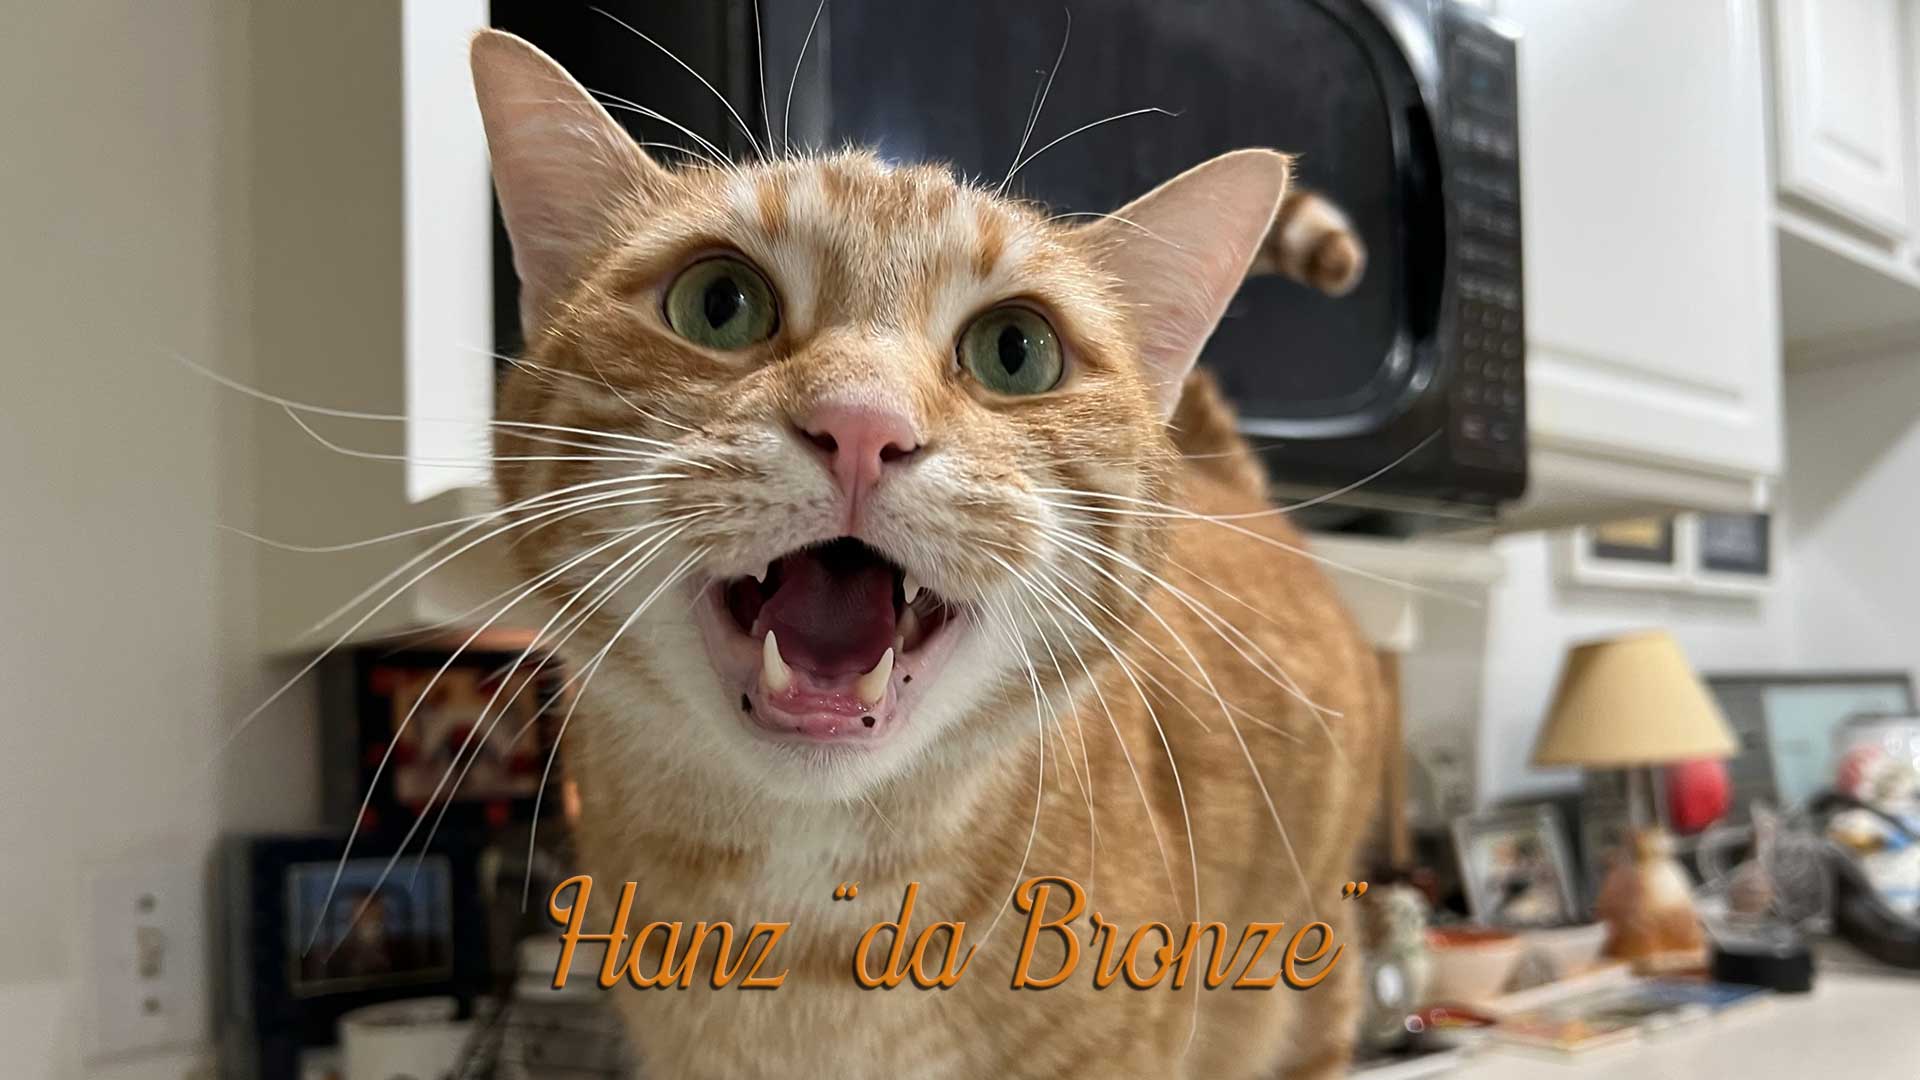 Hanz "da Bronze" with name